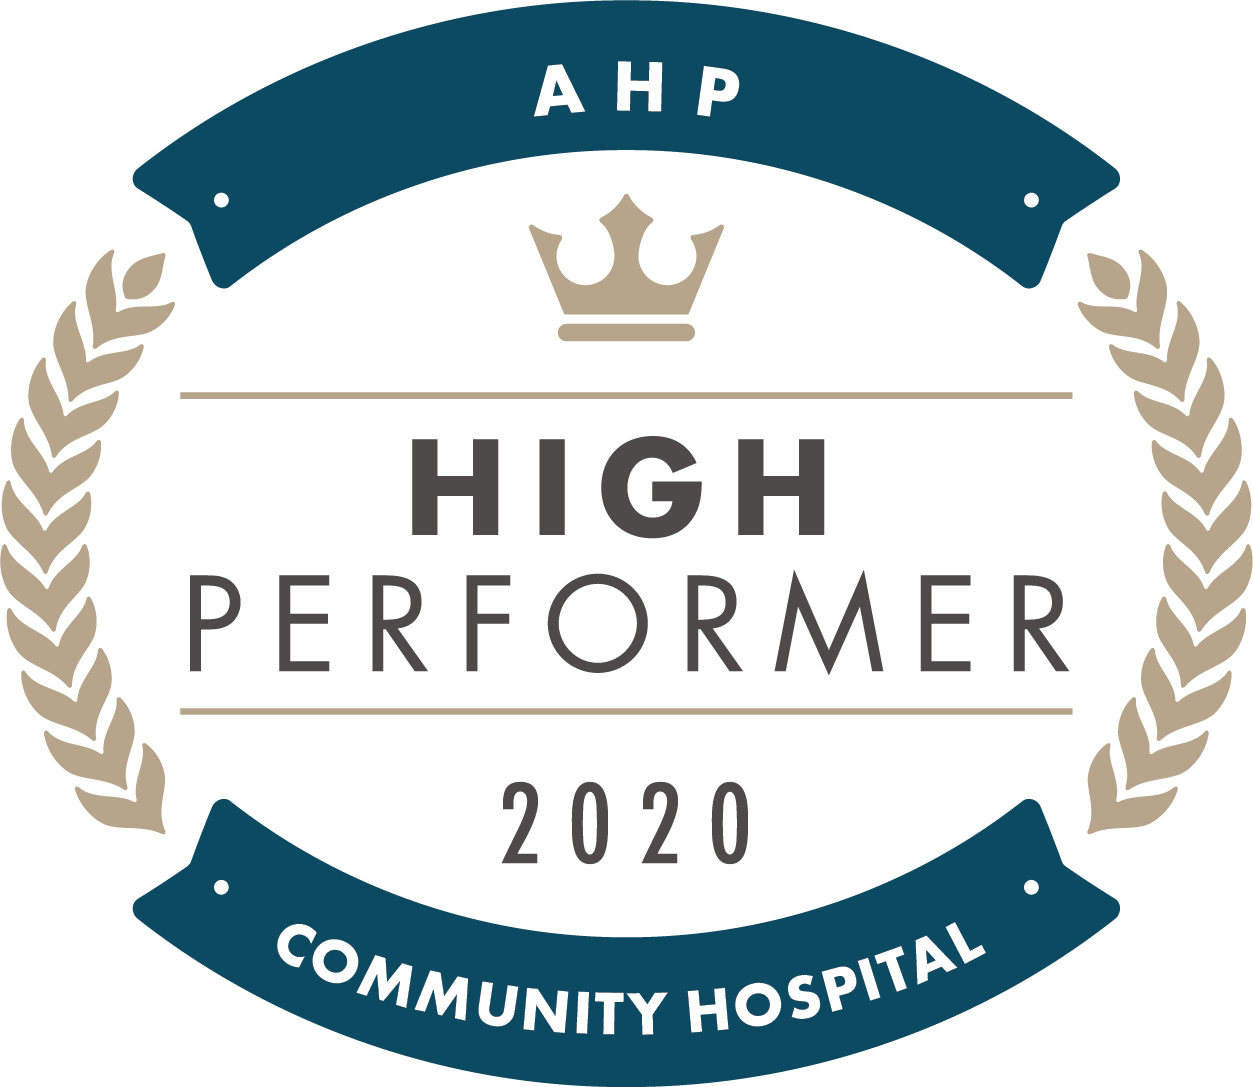 AHP High Performer 2020